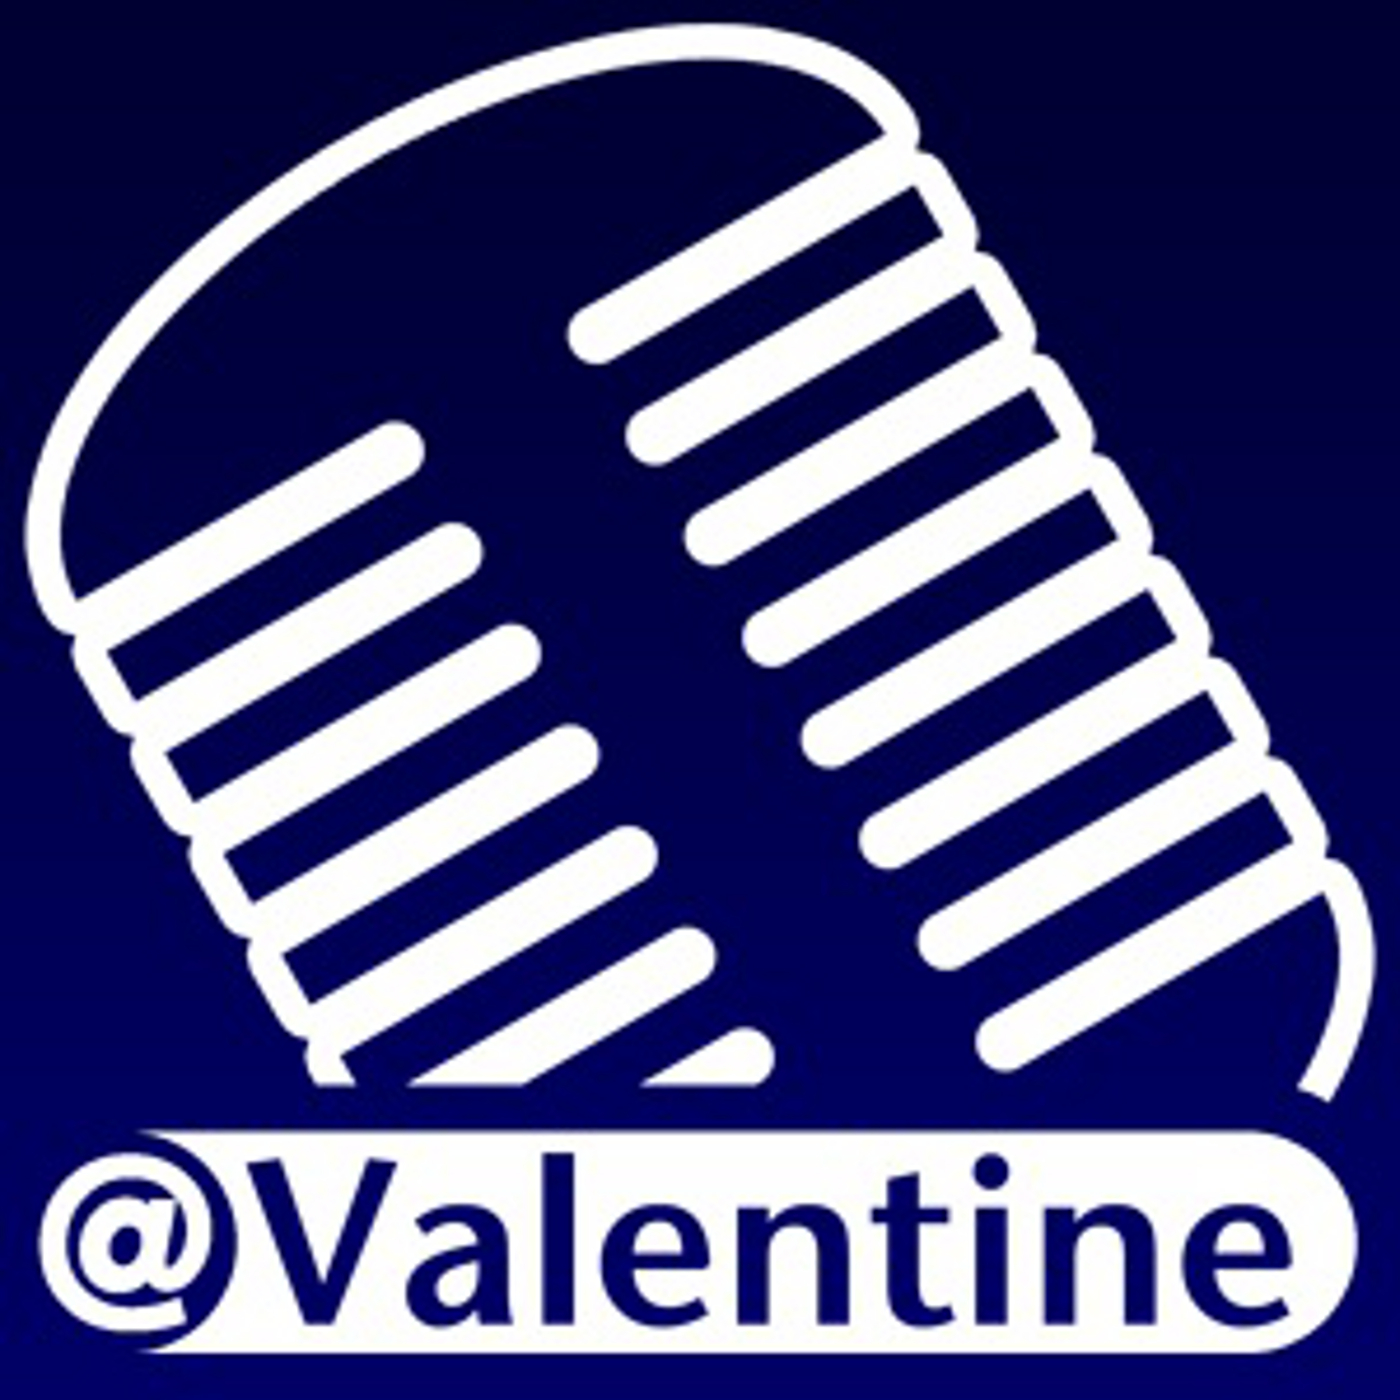 ValentineCast Episode #211 - New Years